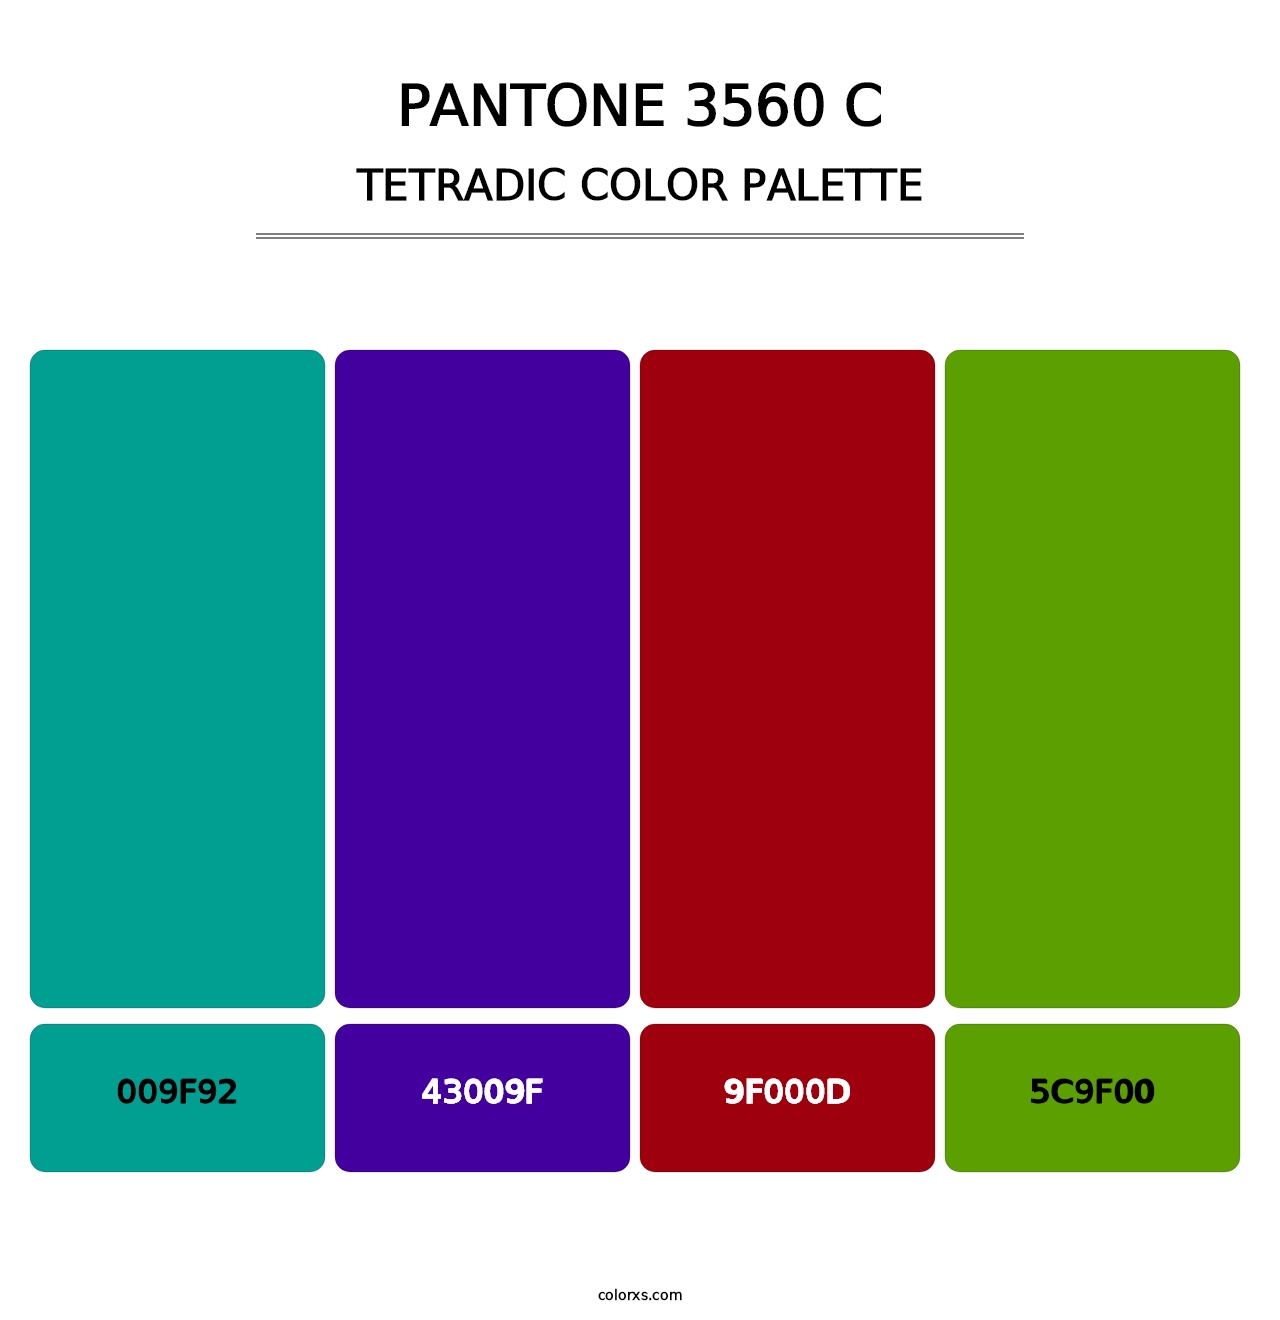 PANTONE 3560 C - Tetradic Color Palette